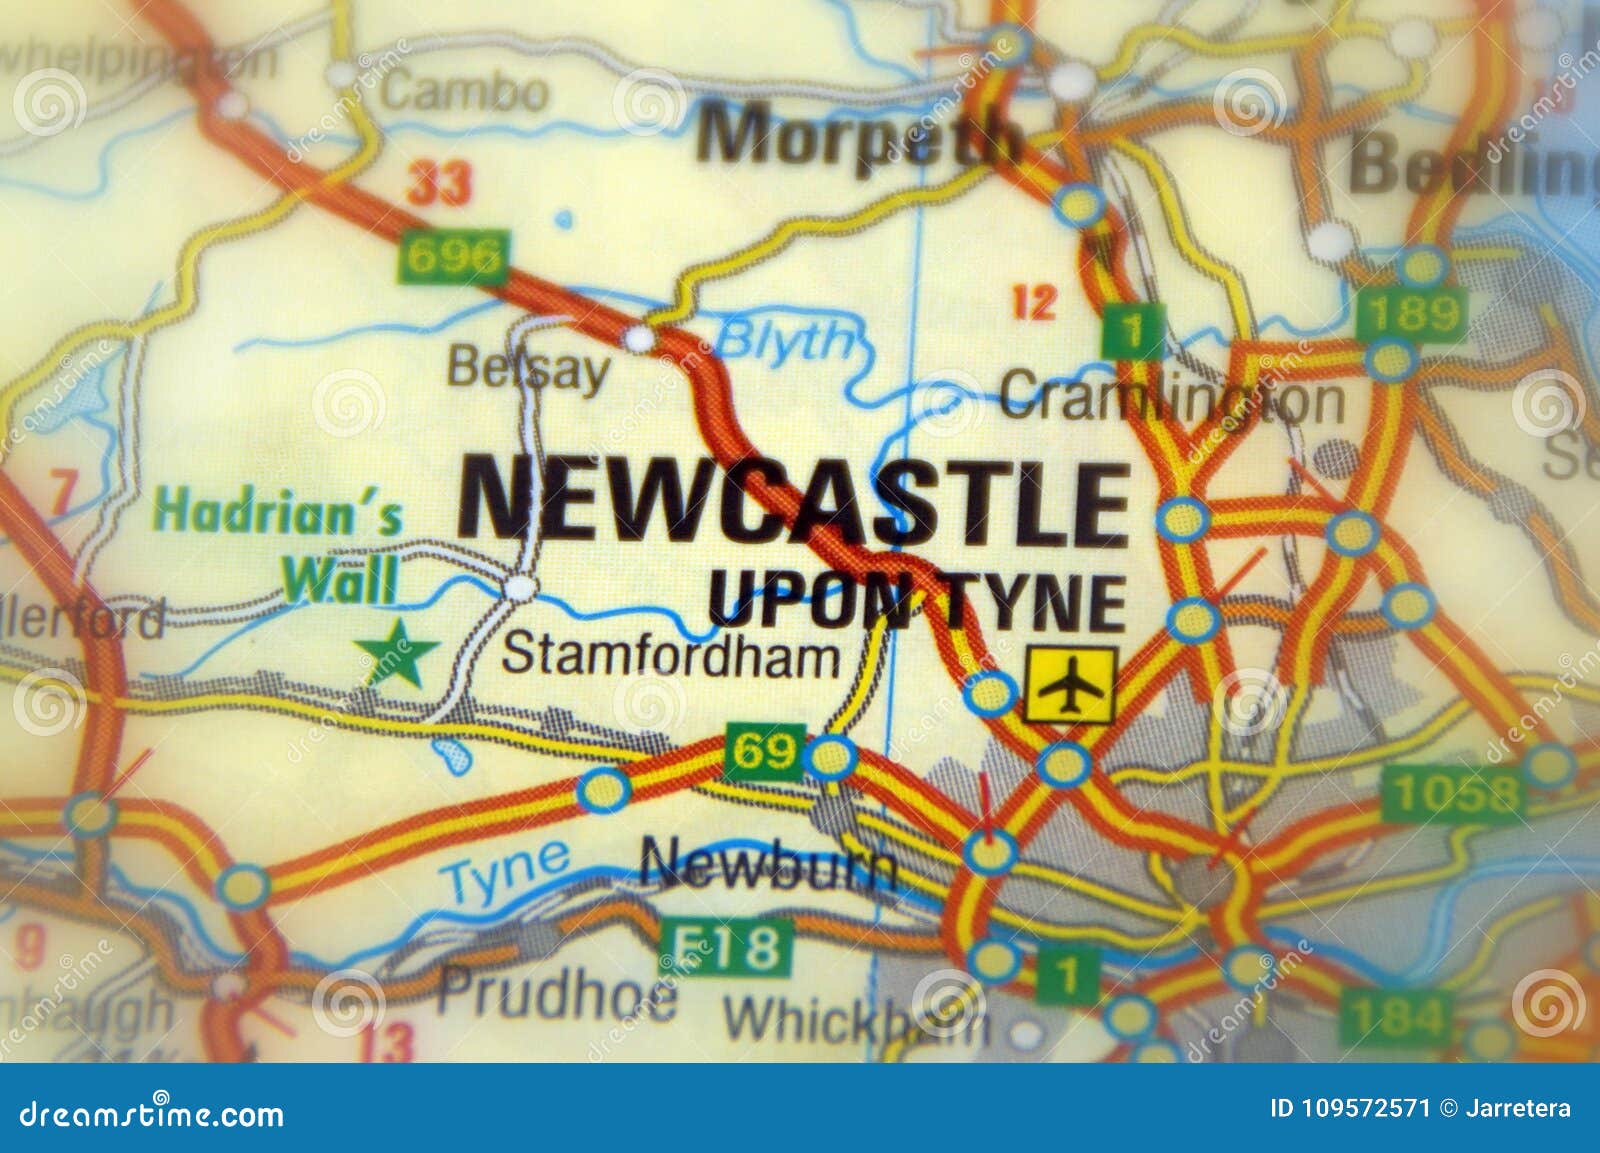 Newcastle Tyne Known As Newcastle City Tyne Wear North East England Newcastle Tyne Known As Newcastle 109572571 